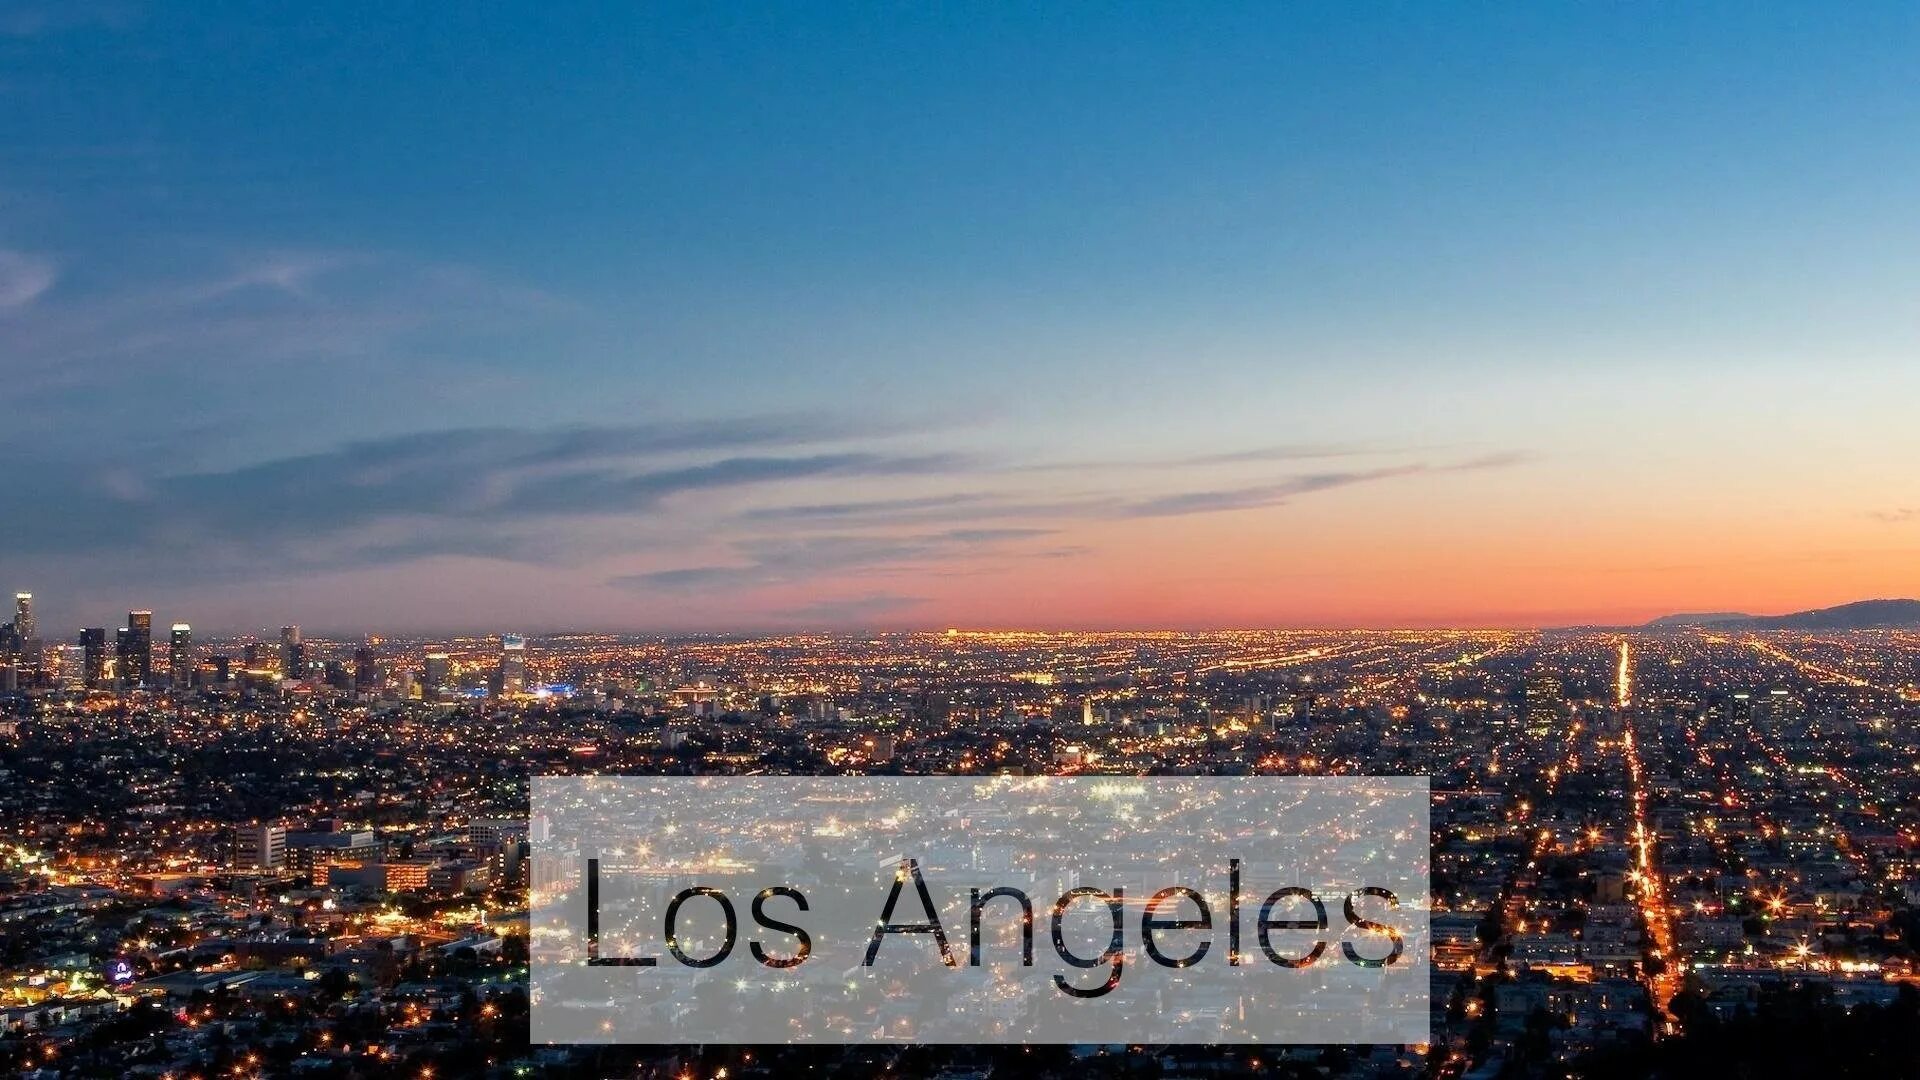 Los angeles 52 текст. Лос-Анджелес. Обои Лос Анджелес Голливуд. Горы Лос Анджелеса.